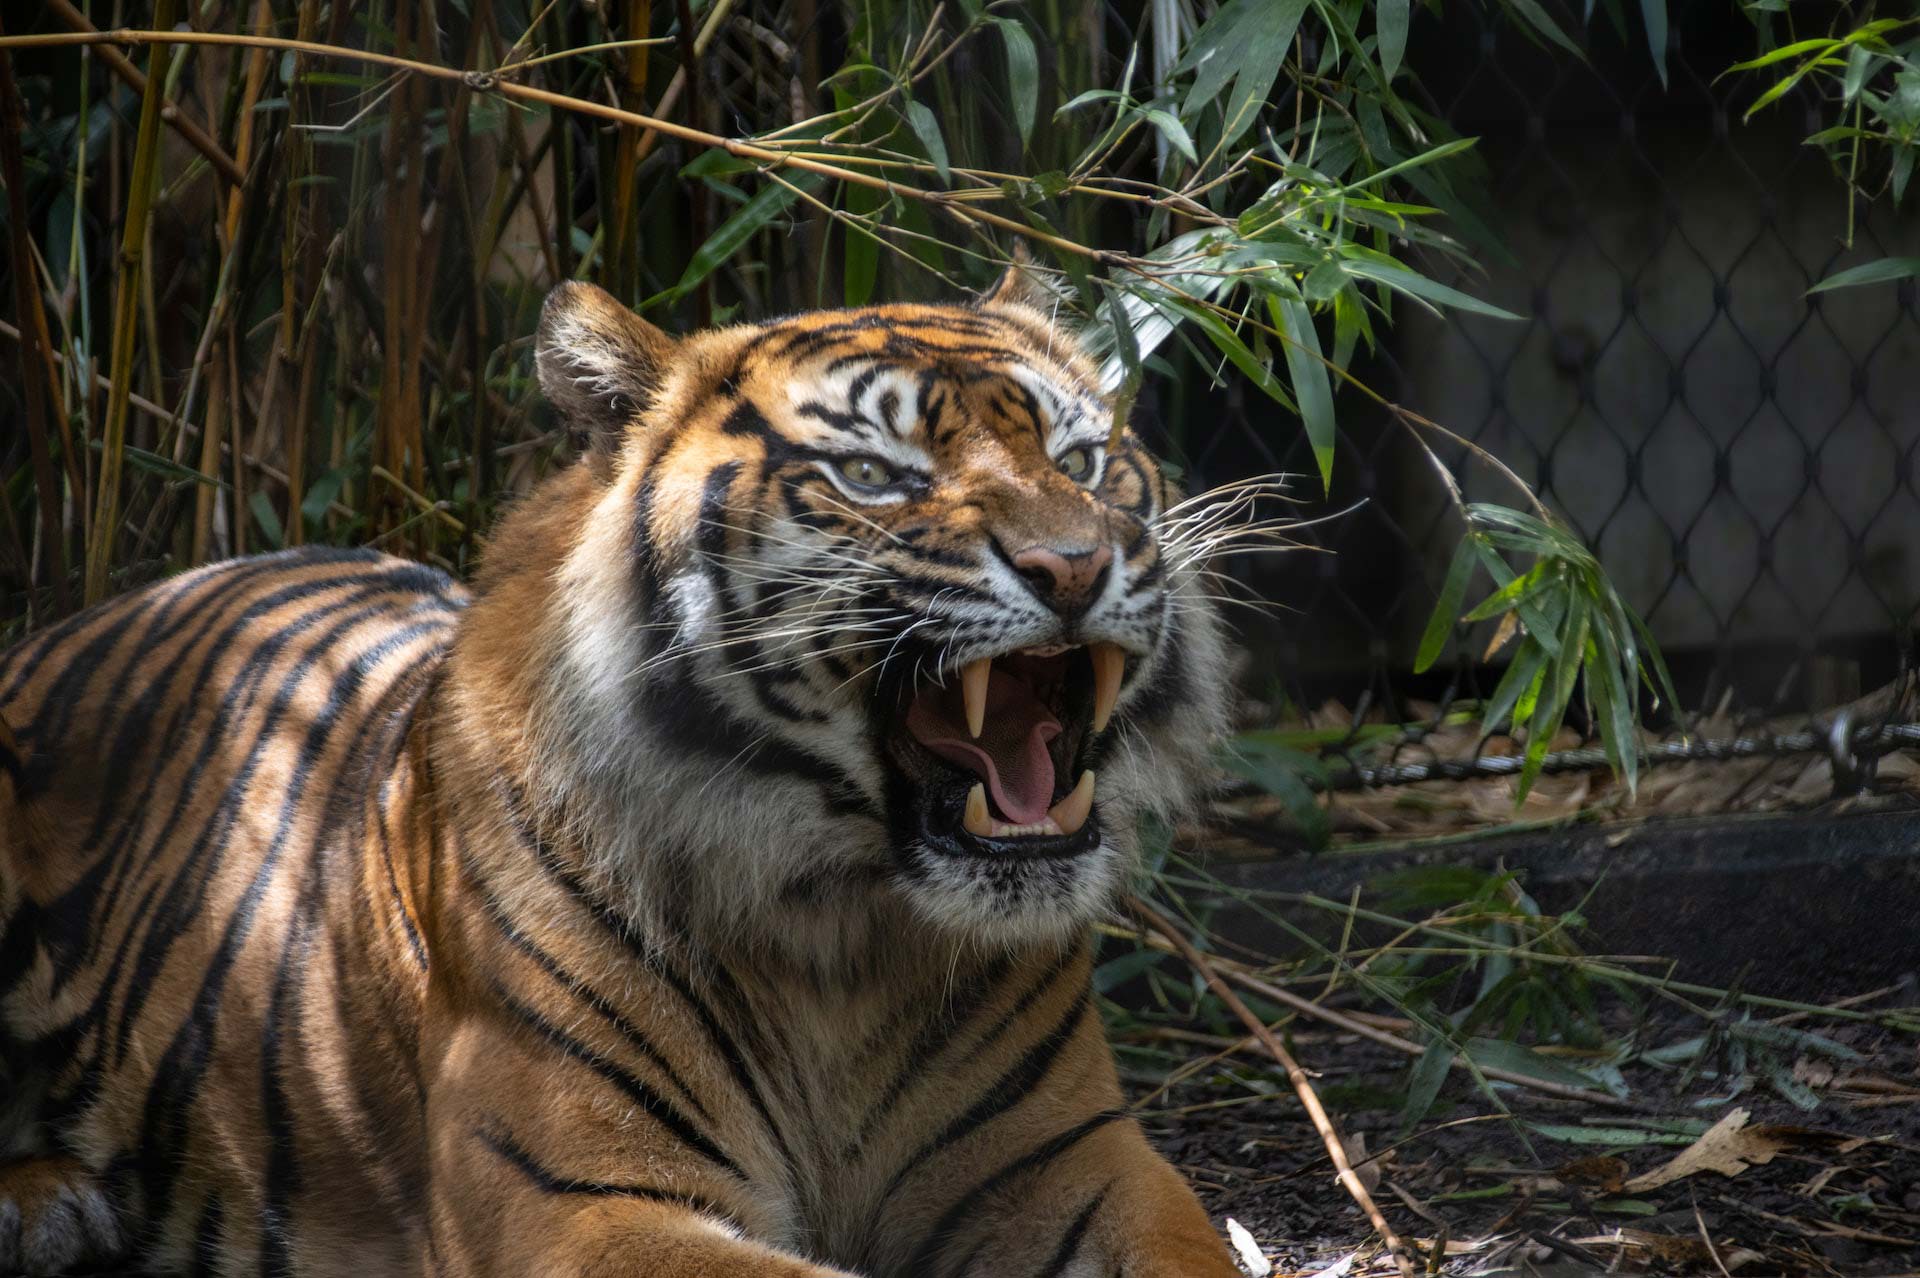 A tiger at the Taronga zoo in Australia